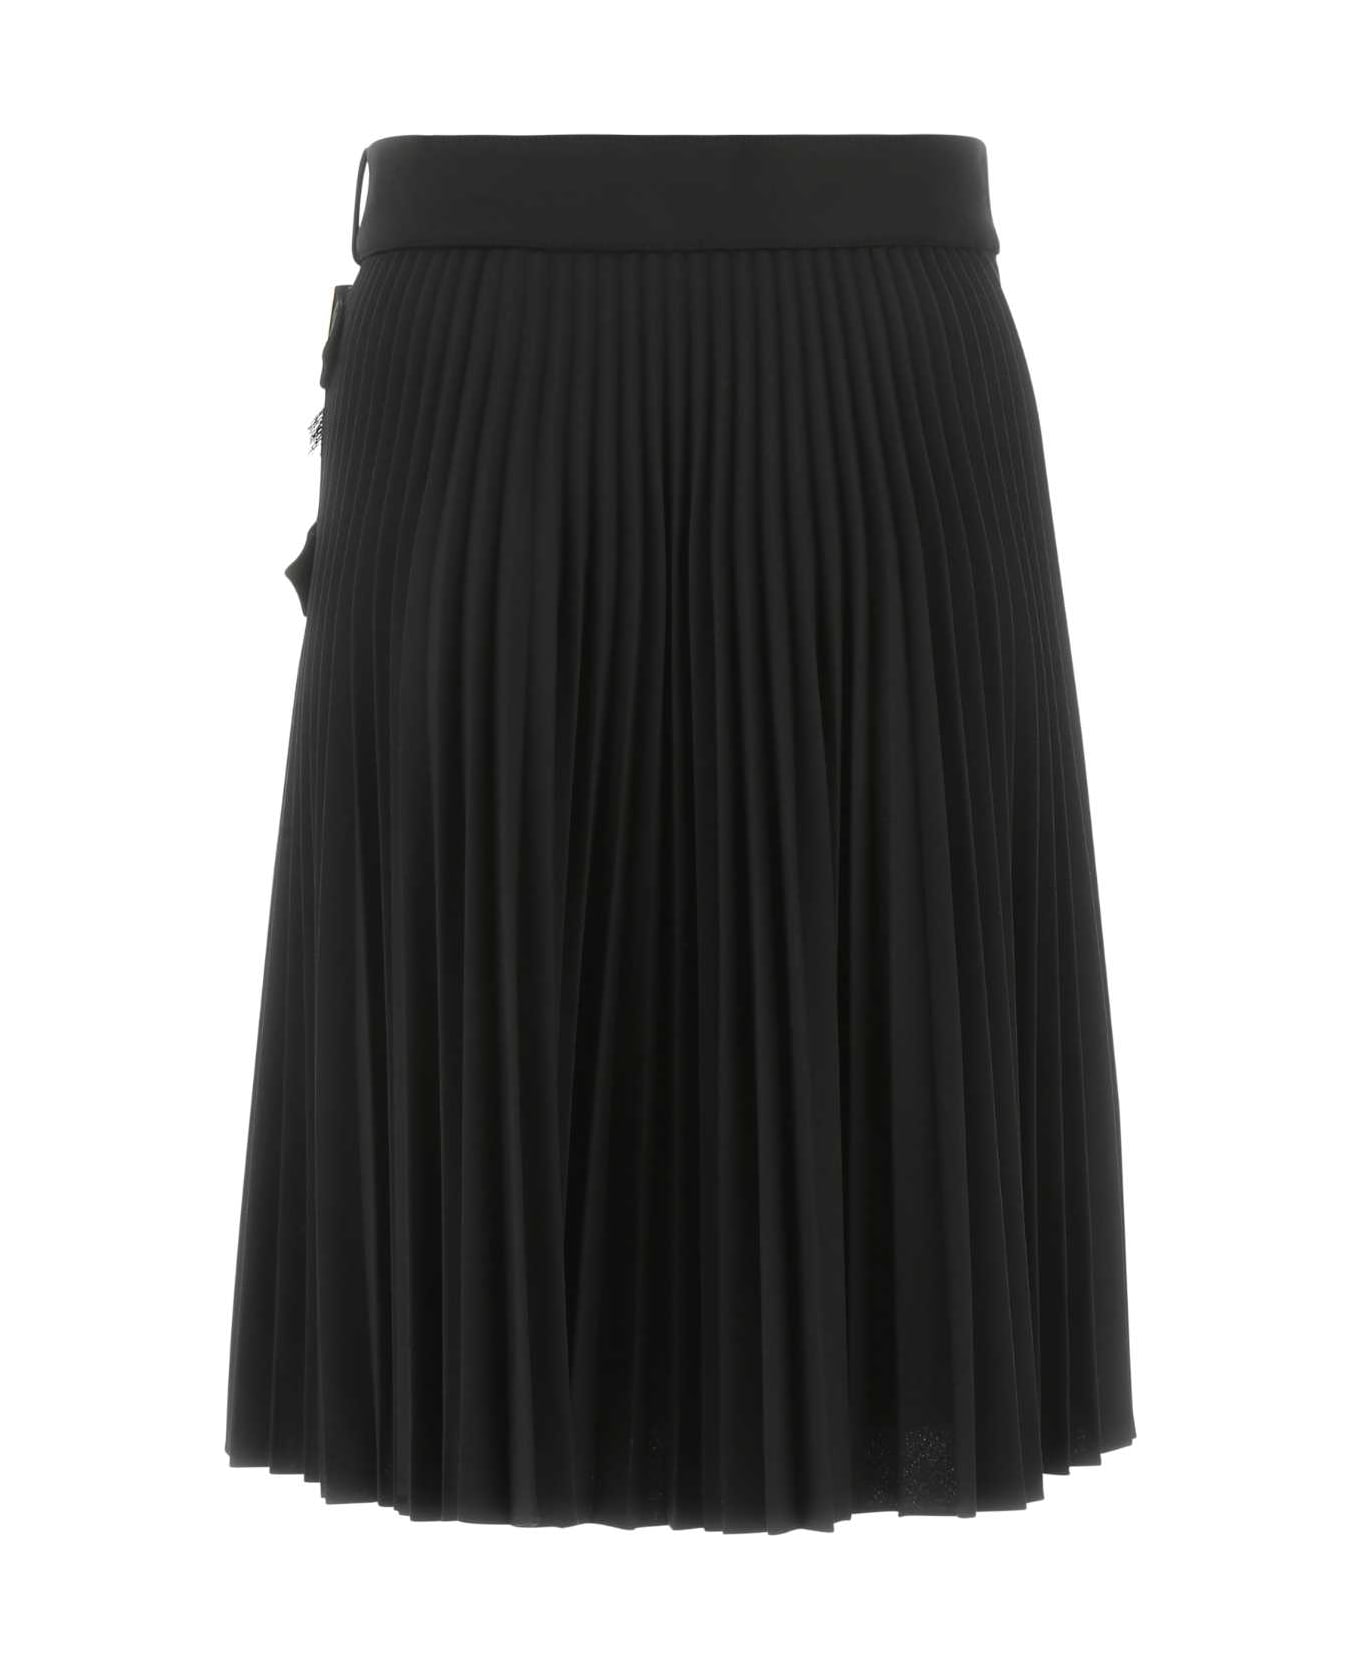 Burberry Black Stretch Polyester Blend Skirt - A1189 スカート